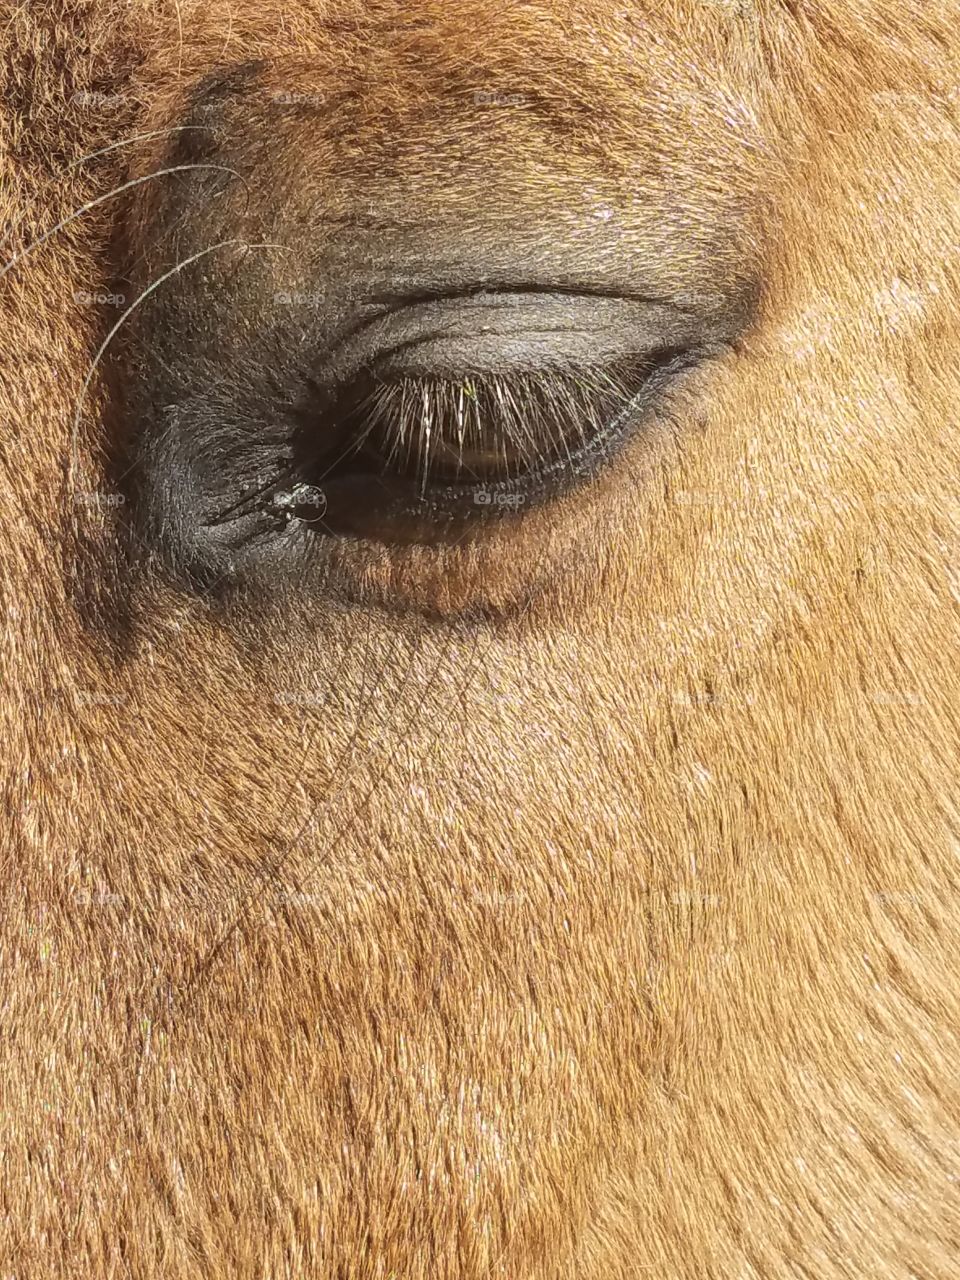 Buckskin Horse eye